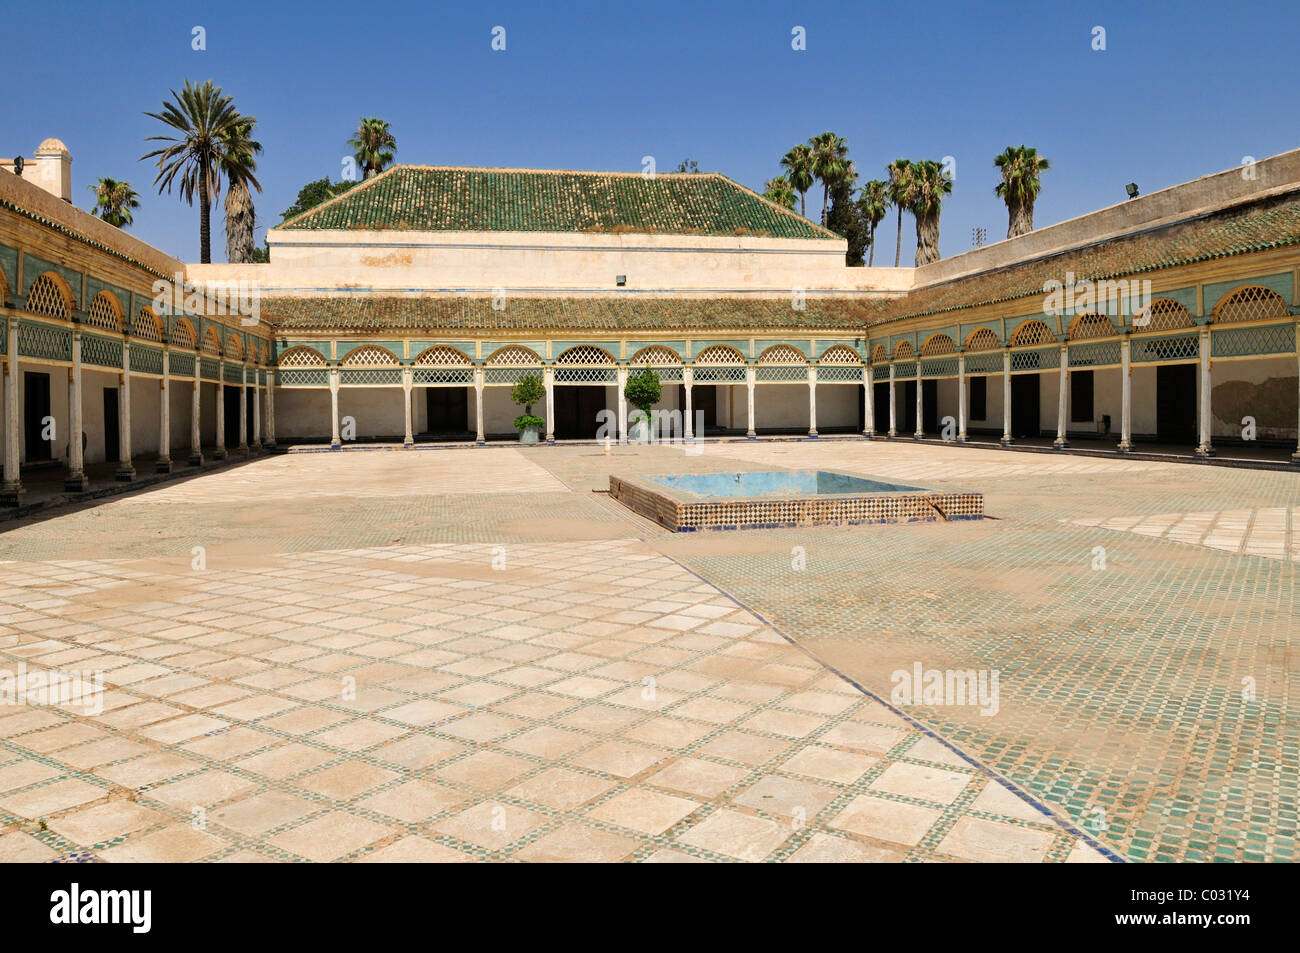 Courtyard in the El Bahia Palace, Marrakesh Medina, Unesco World Heritage Site, Morocco, North Africa Stock Photo